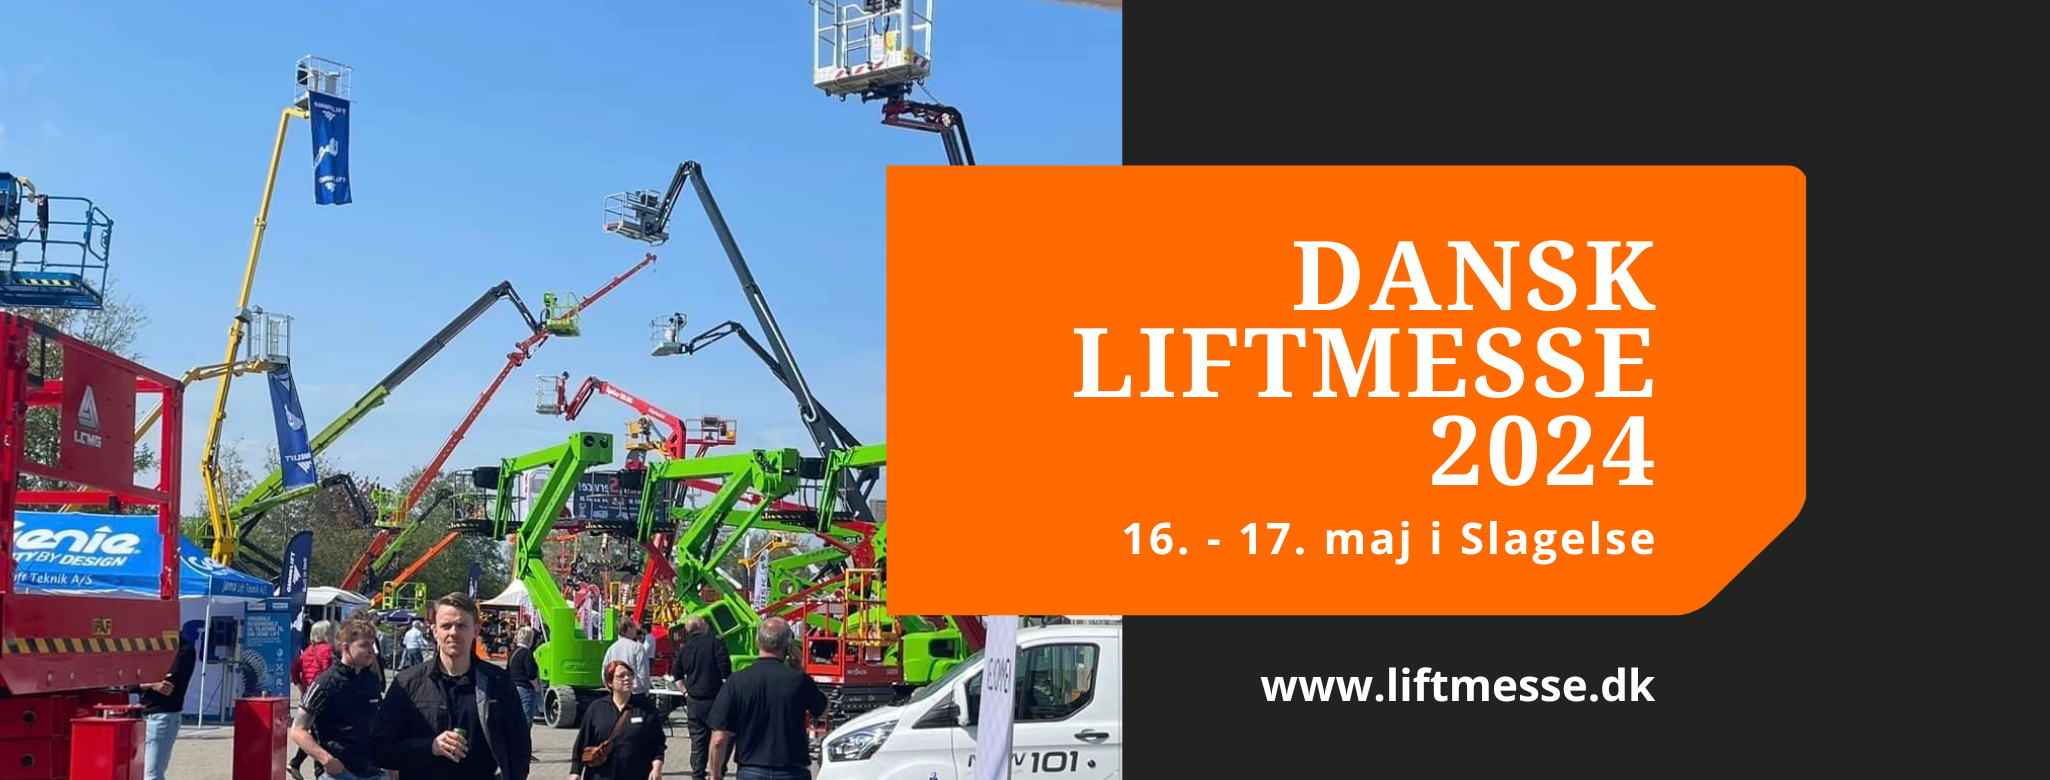 I ragni Easy Lift con Hammer Lifte alla fiera Dansk Liftmesse in Danimarca